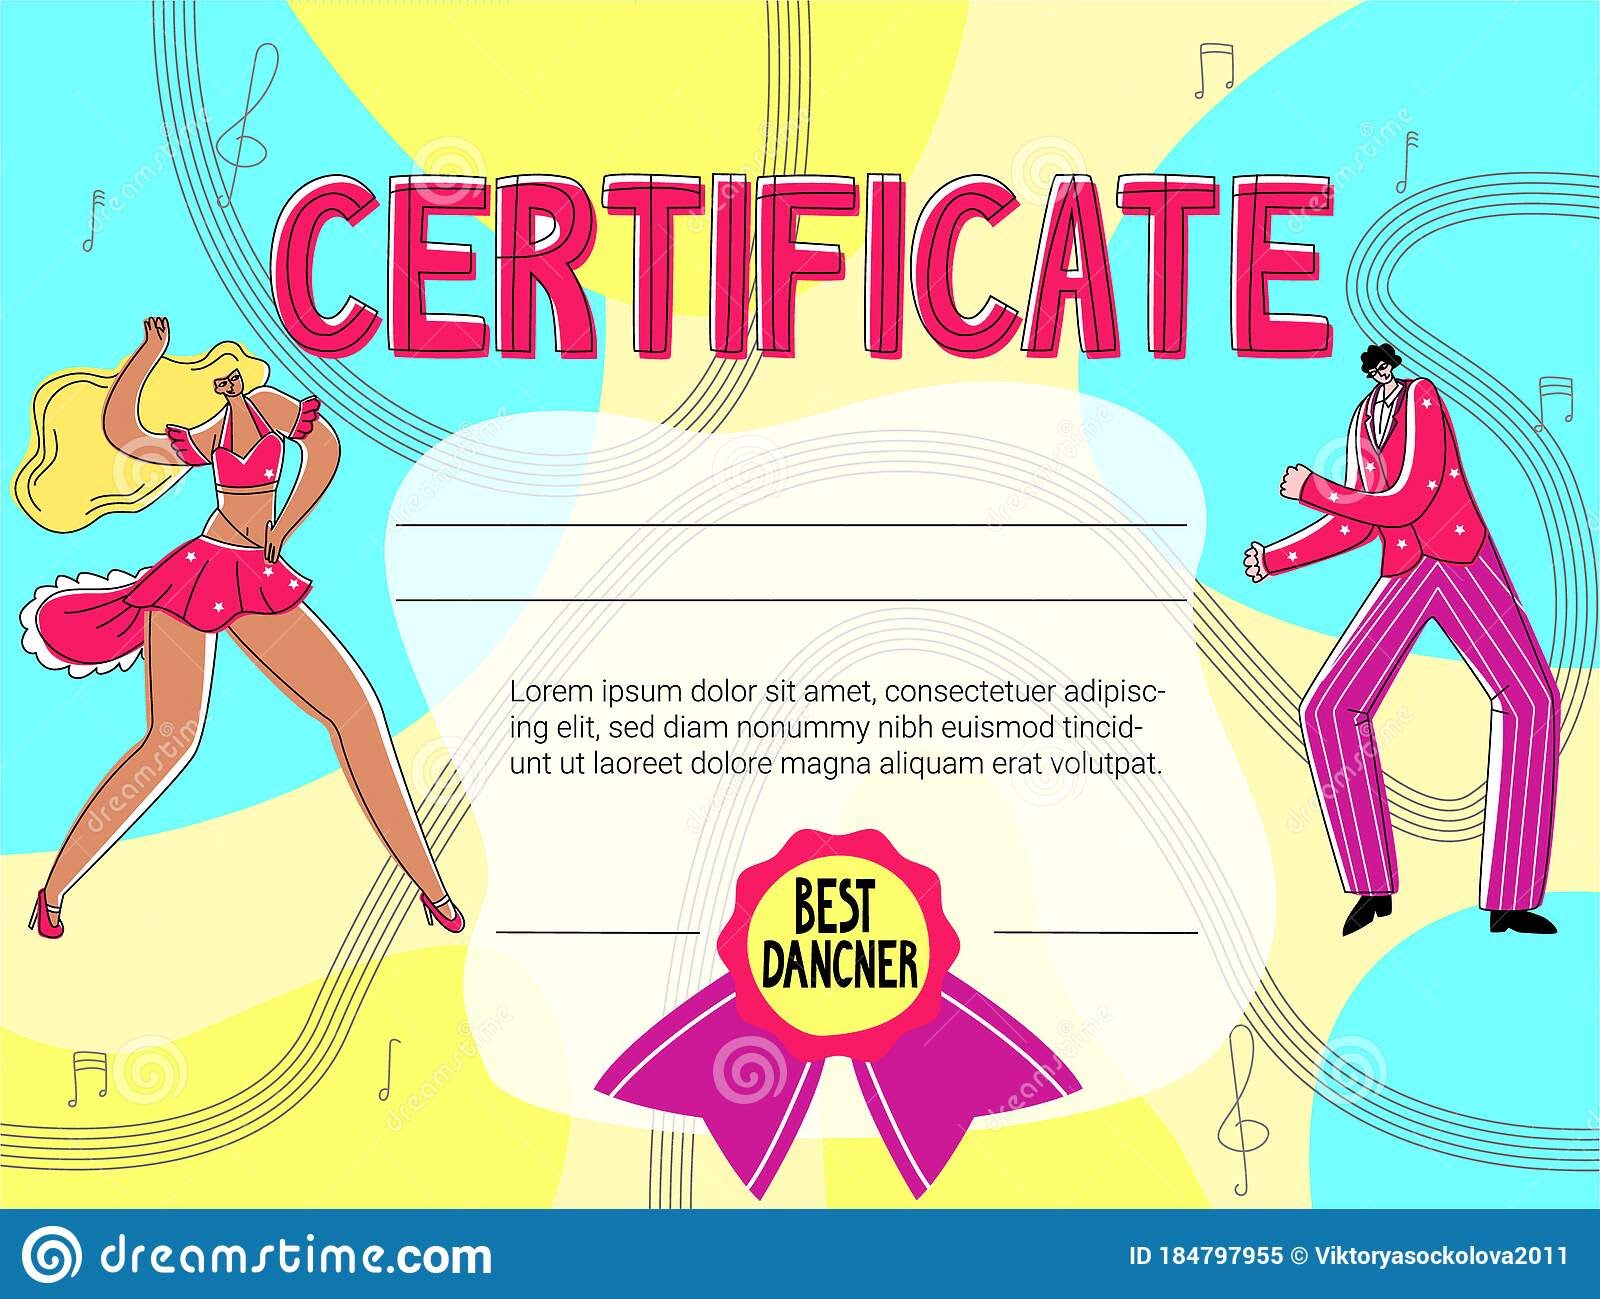 Free Printable Dance Certificate Templates